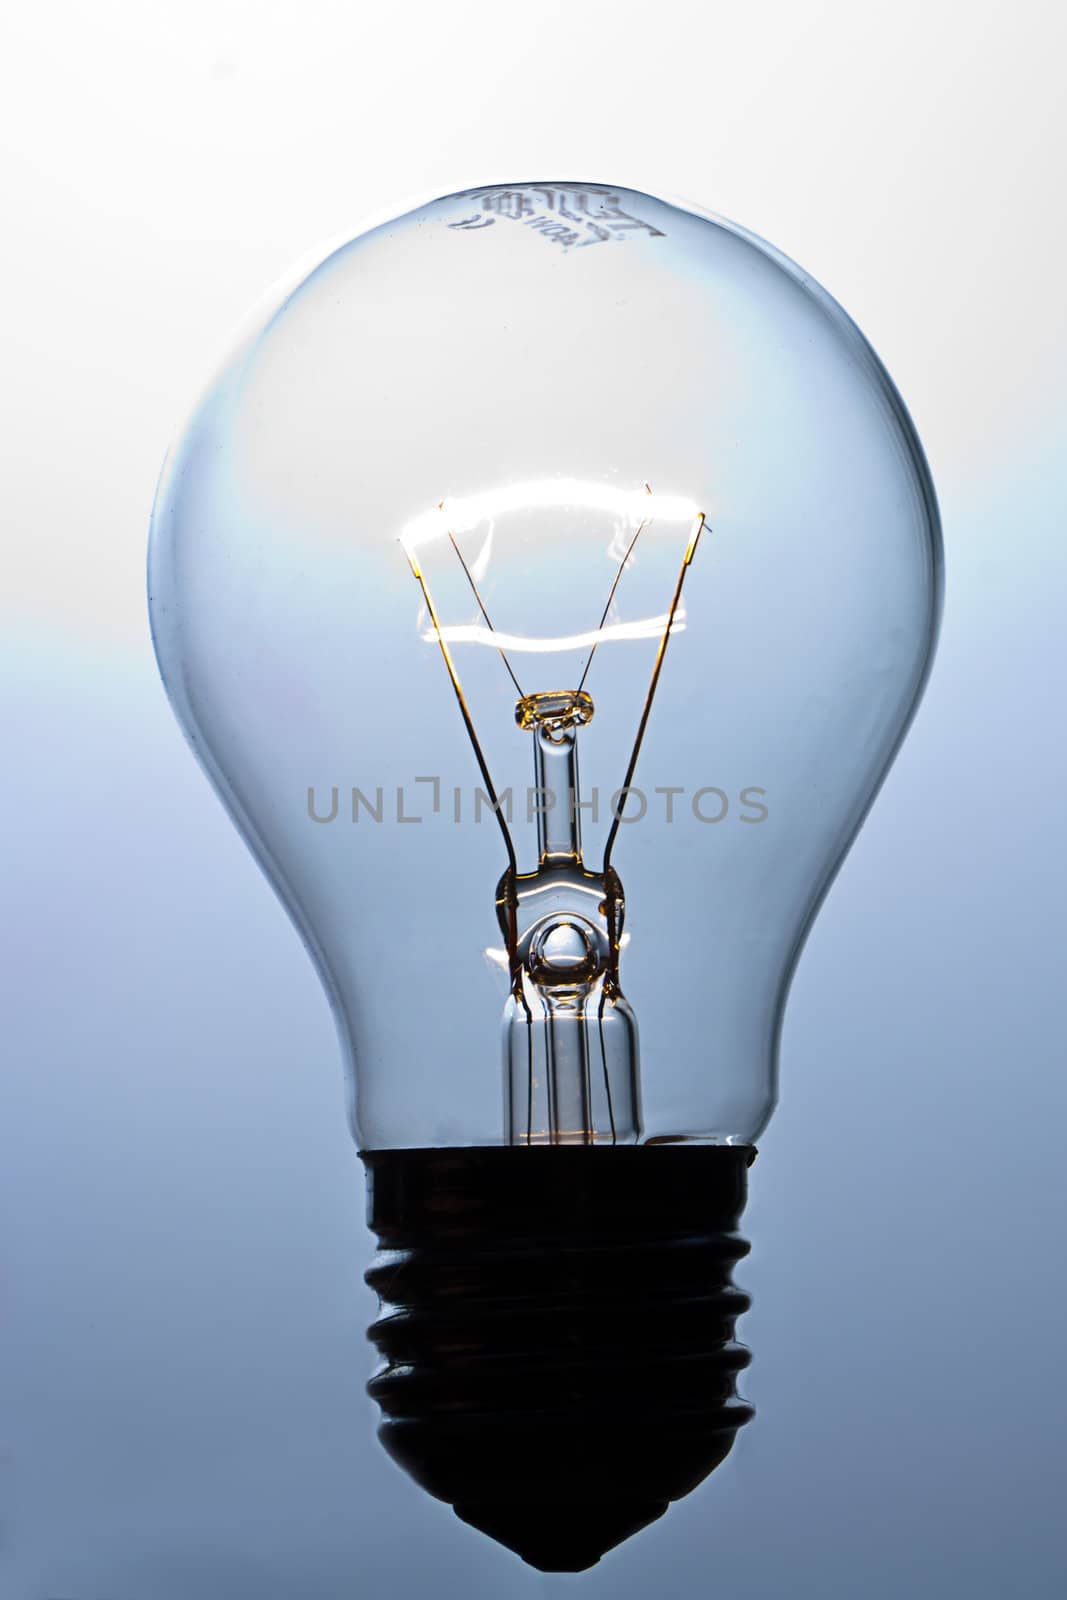 A magically lit light bulb